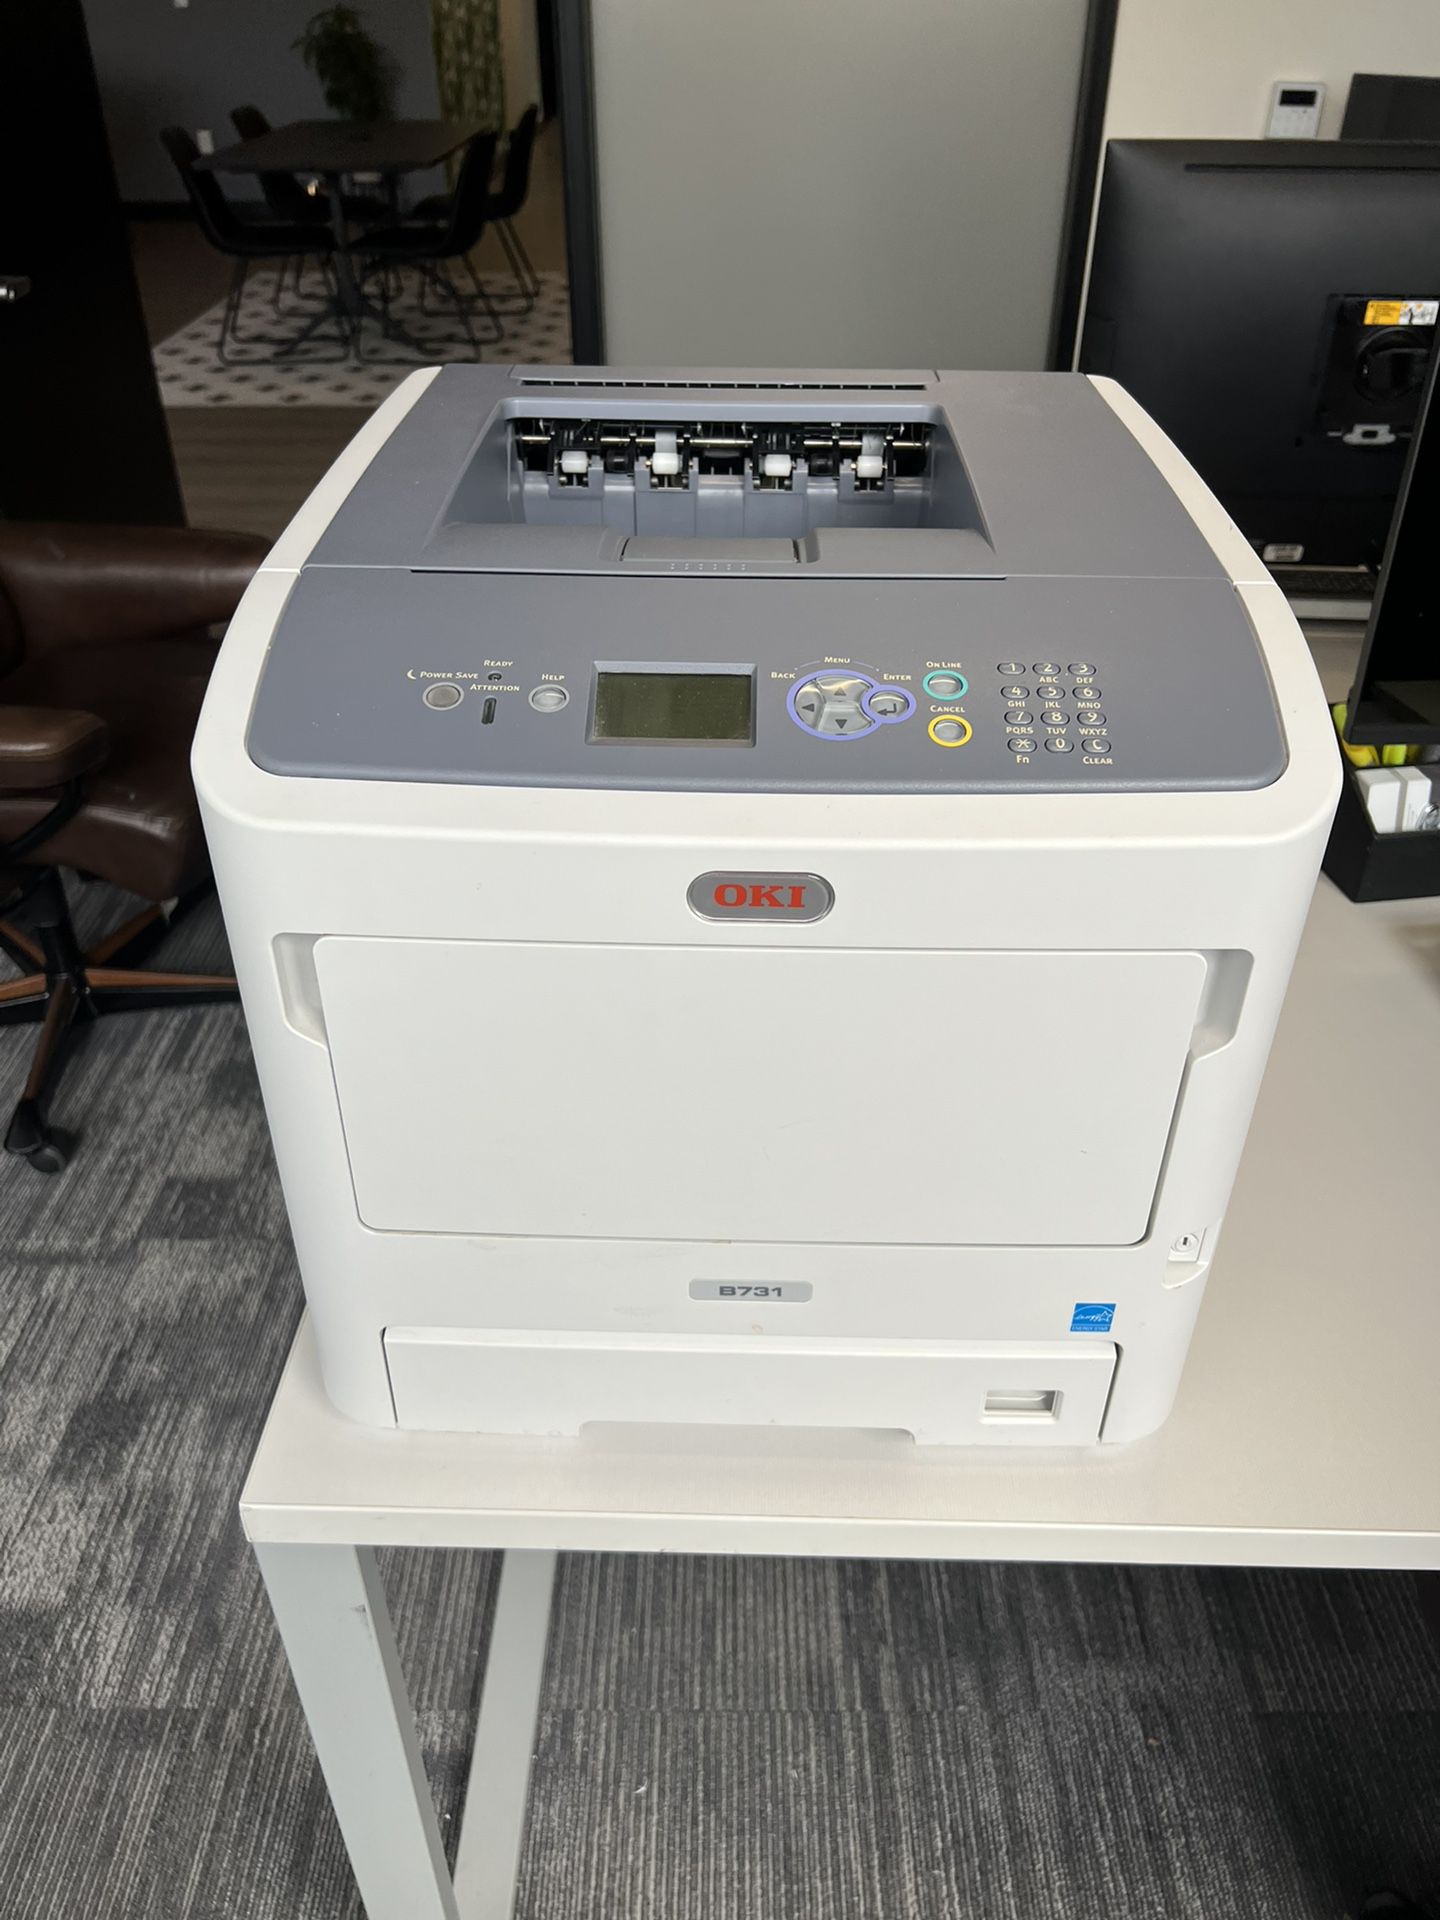 OKI B731 Printer